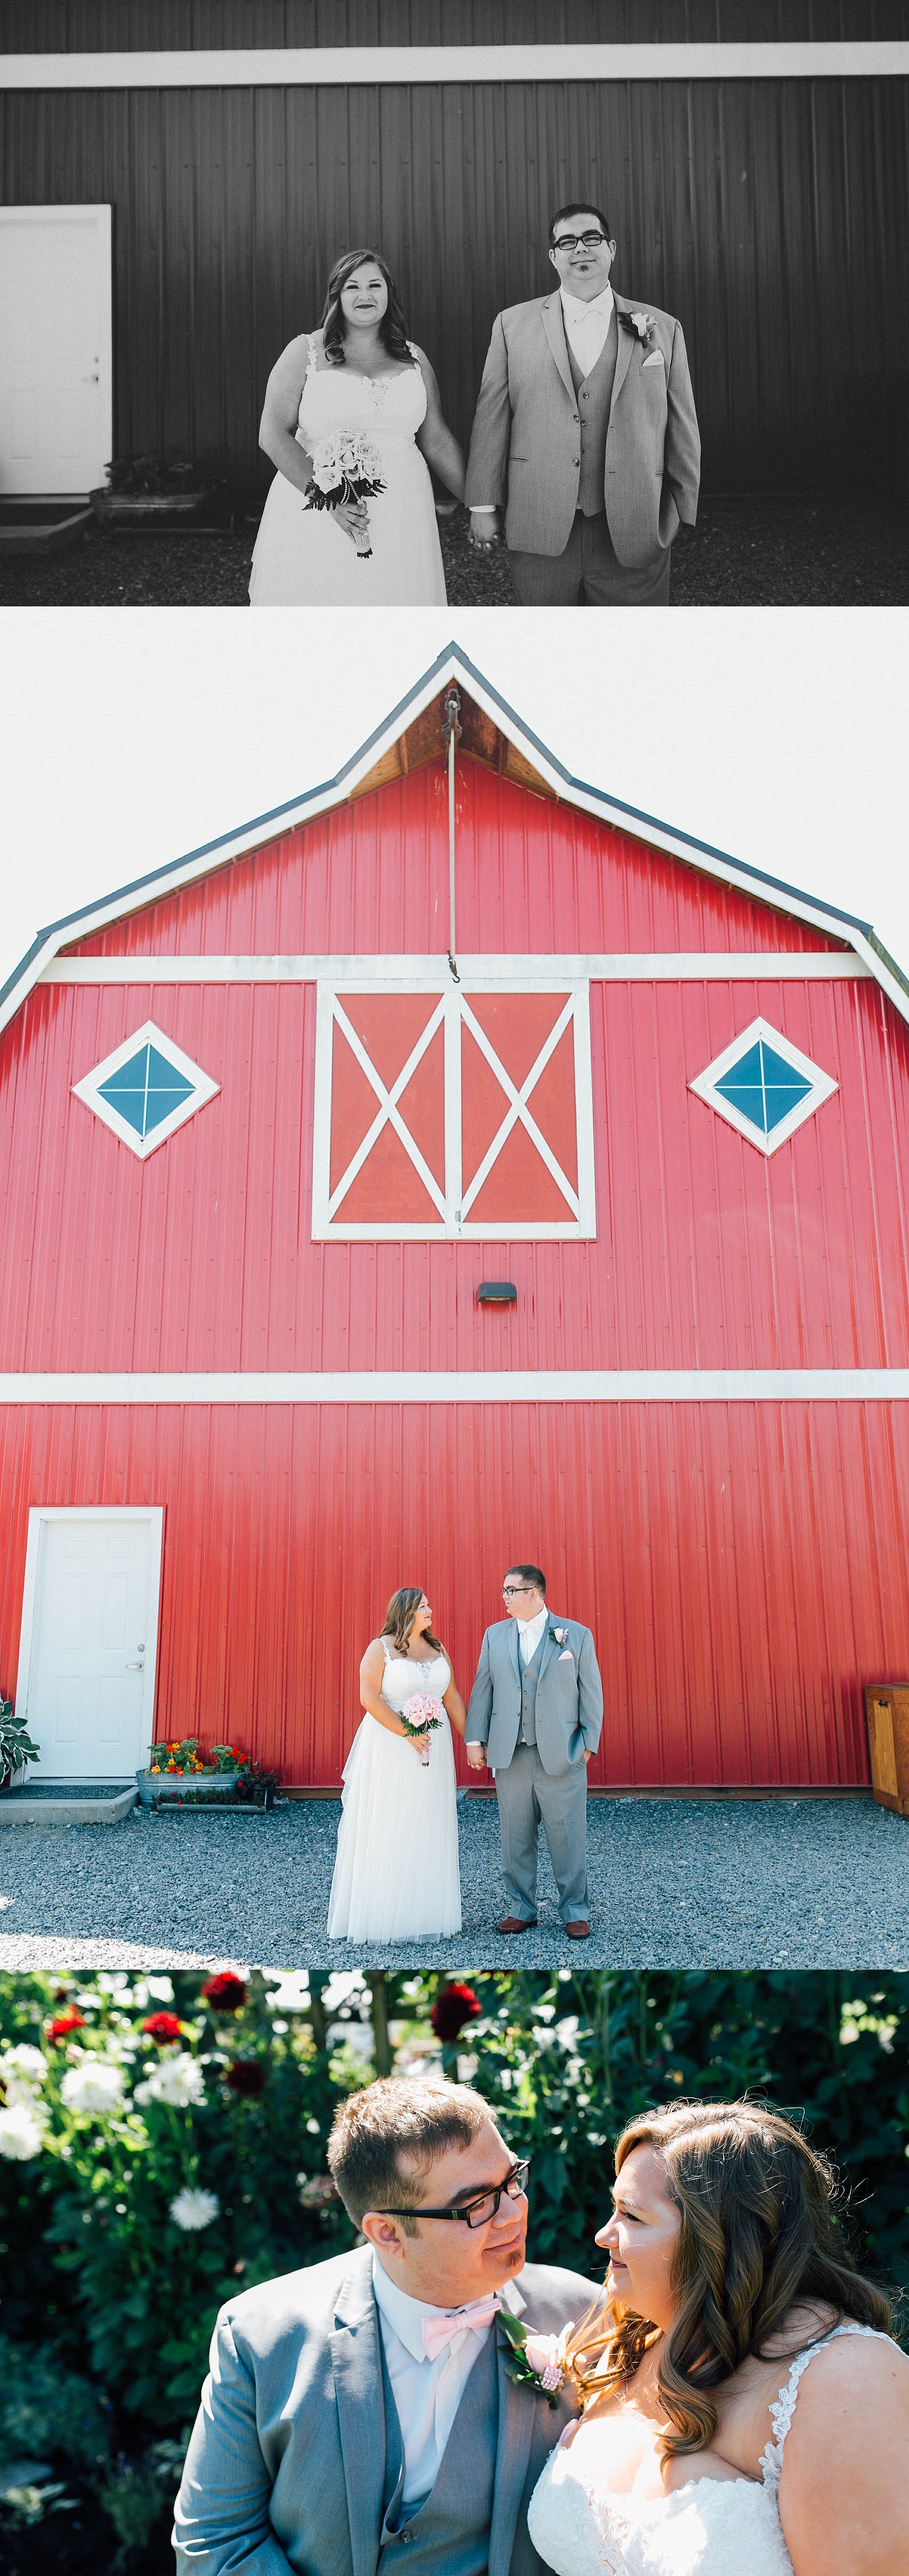 Stocker Farms Wedding Photographer Seattle Wedding Photography Katie and Kyle - Ashley Vos Photography-3.jpg